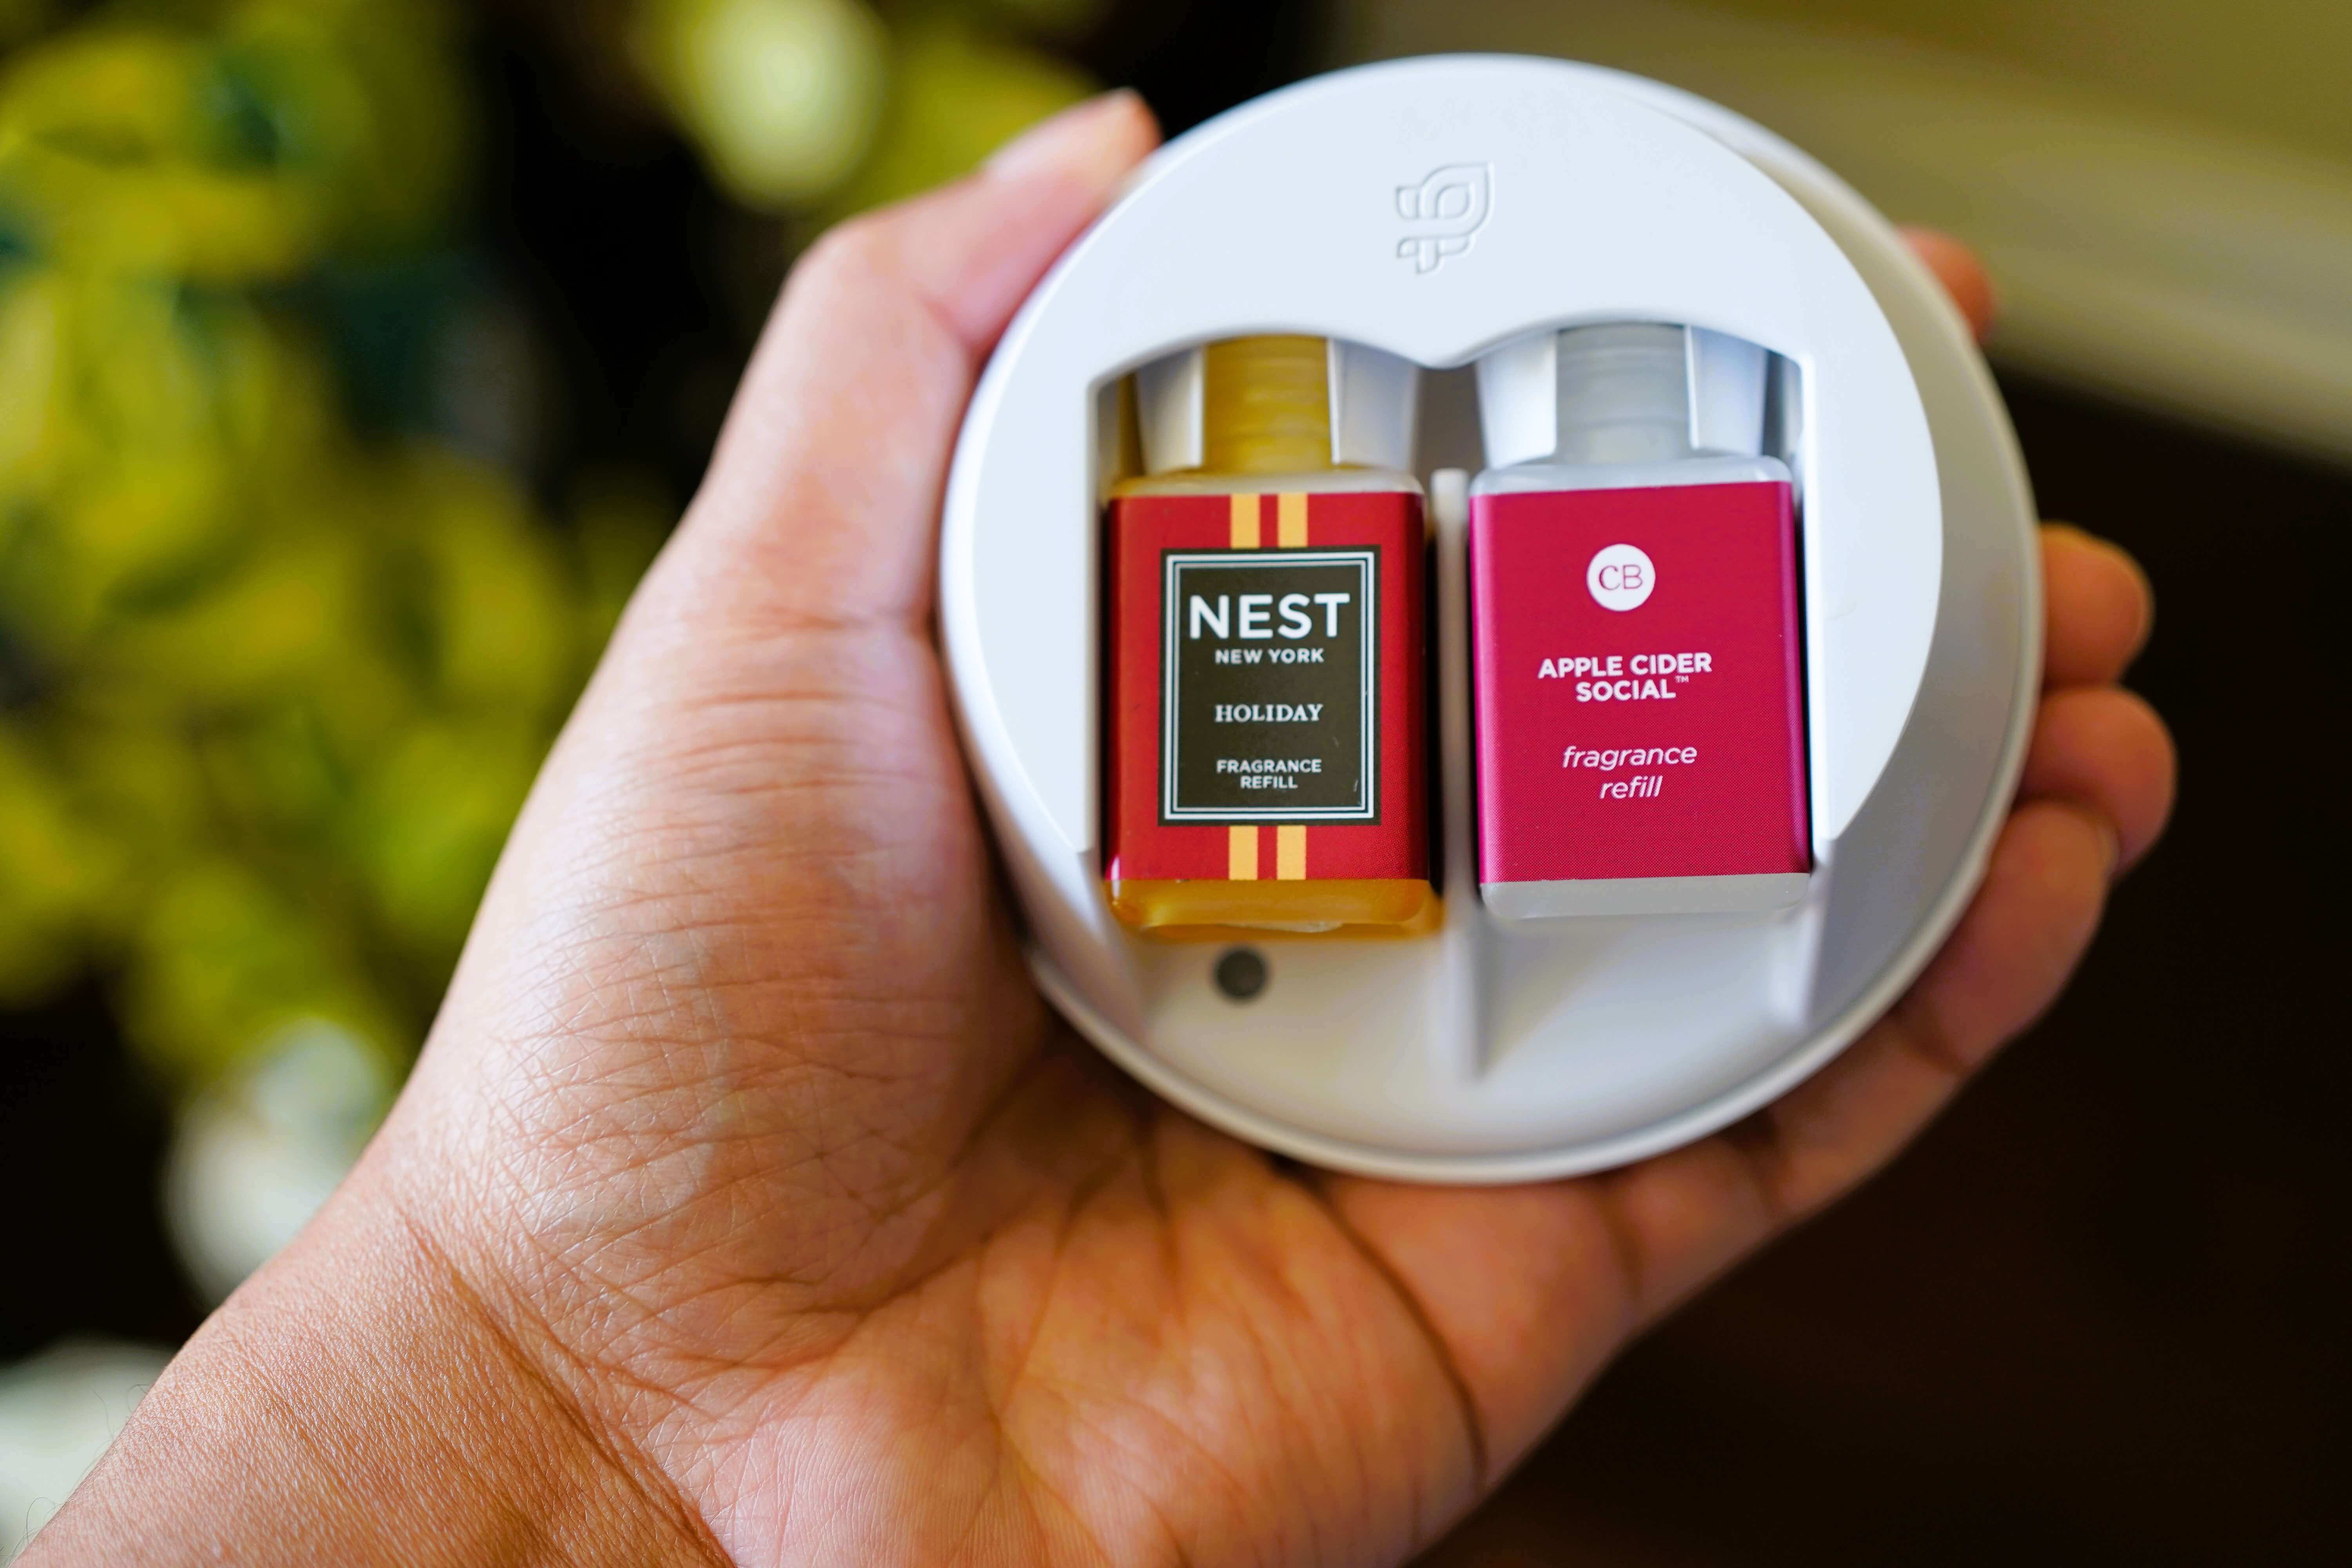 NEST New York NEST Holiday Pura Smart Home Fragrance Diffuser Refill